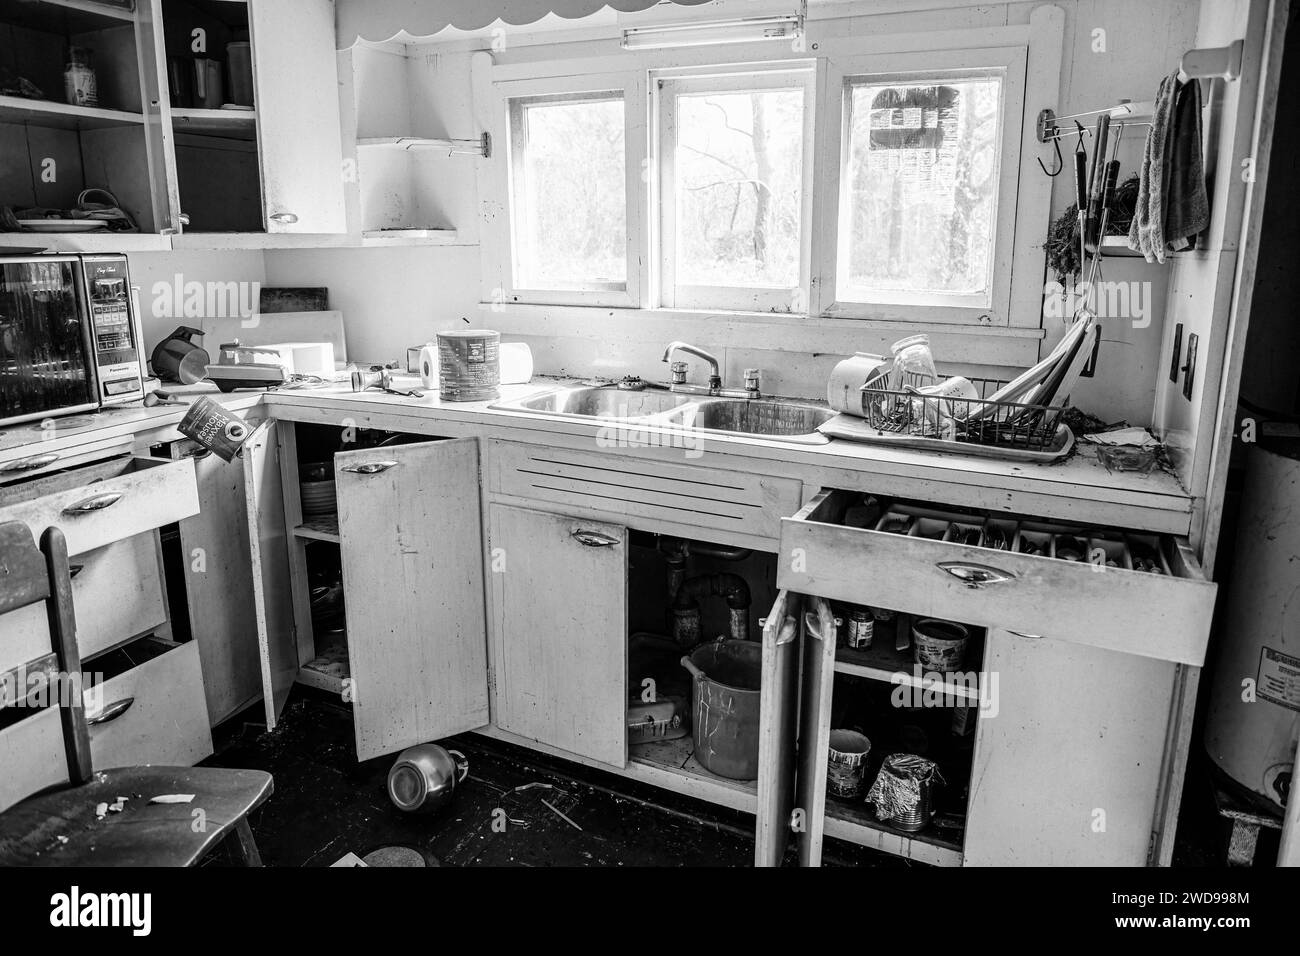 Black and white photograph of a kitchen scene Stock Photo